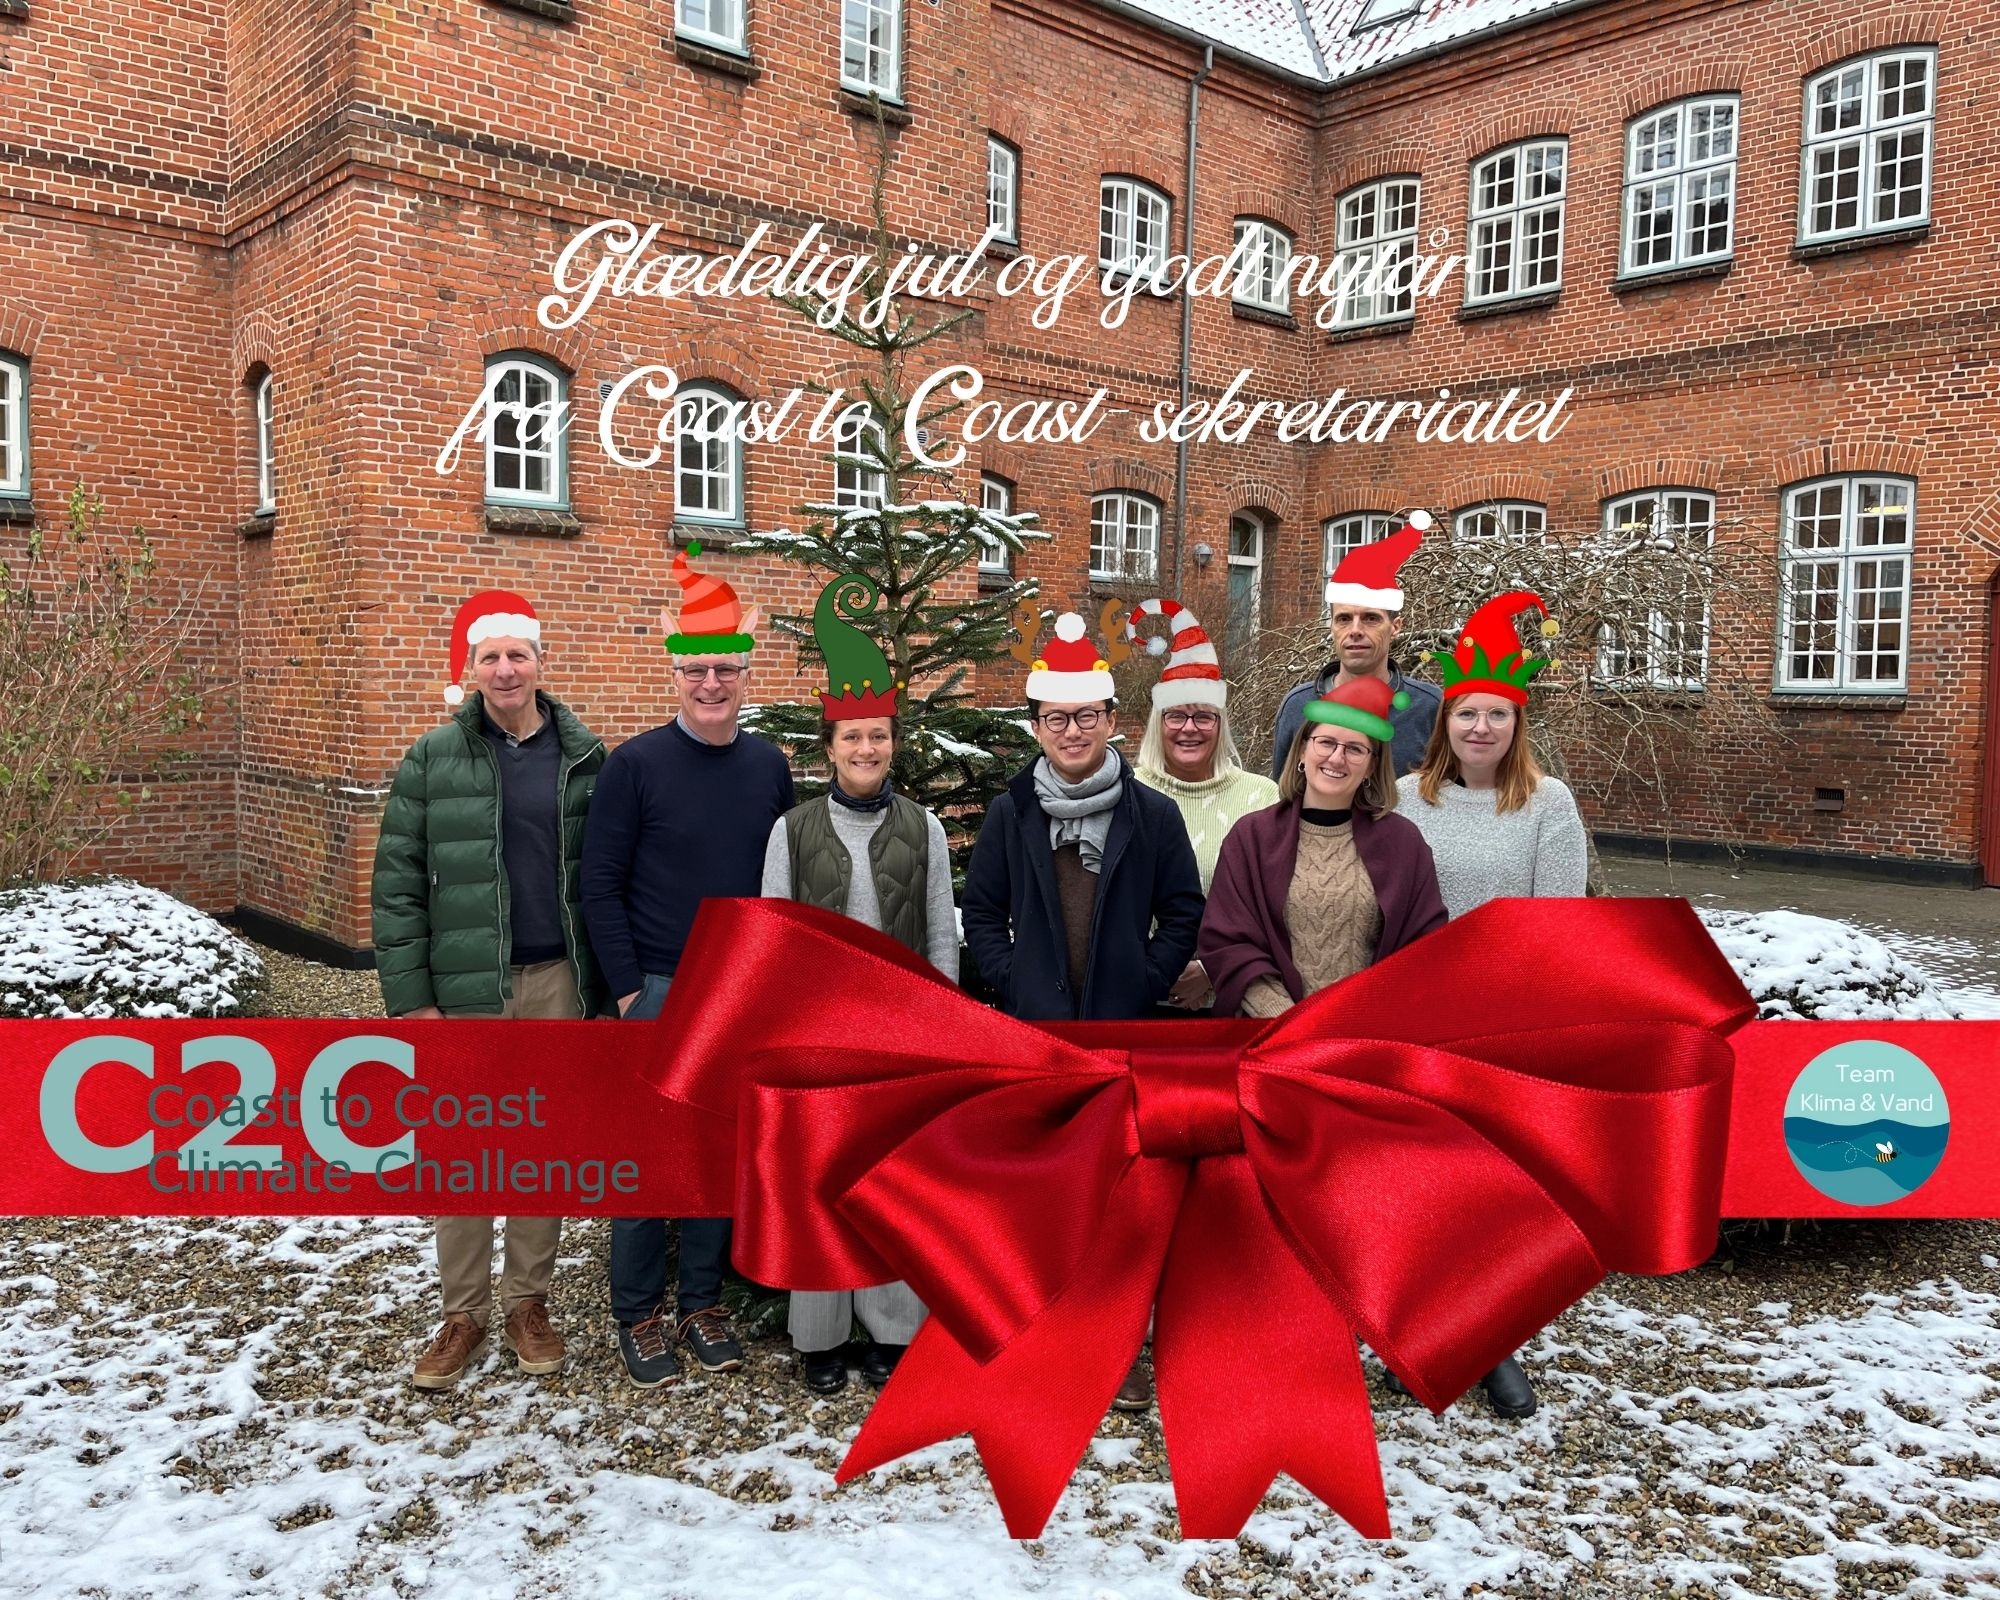 C2C CC sekretariatet - glædelig jul og godt nytår